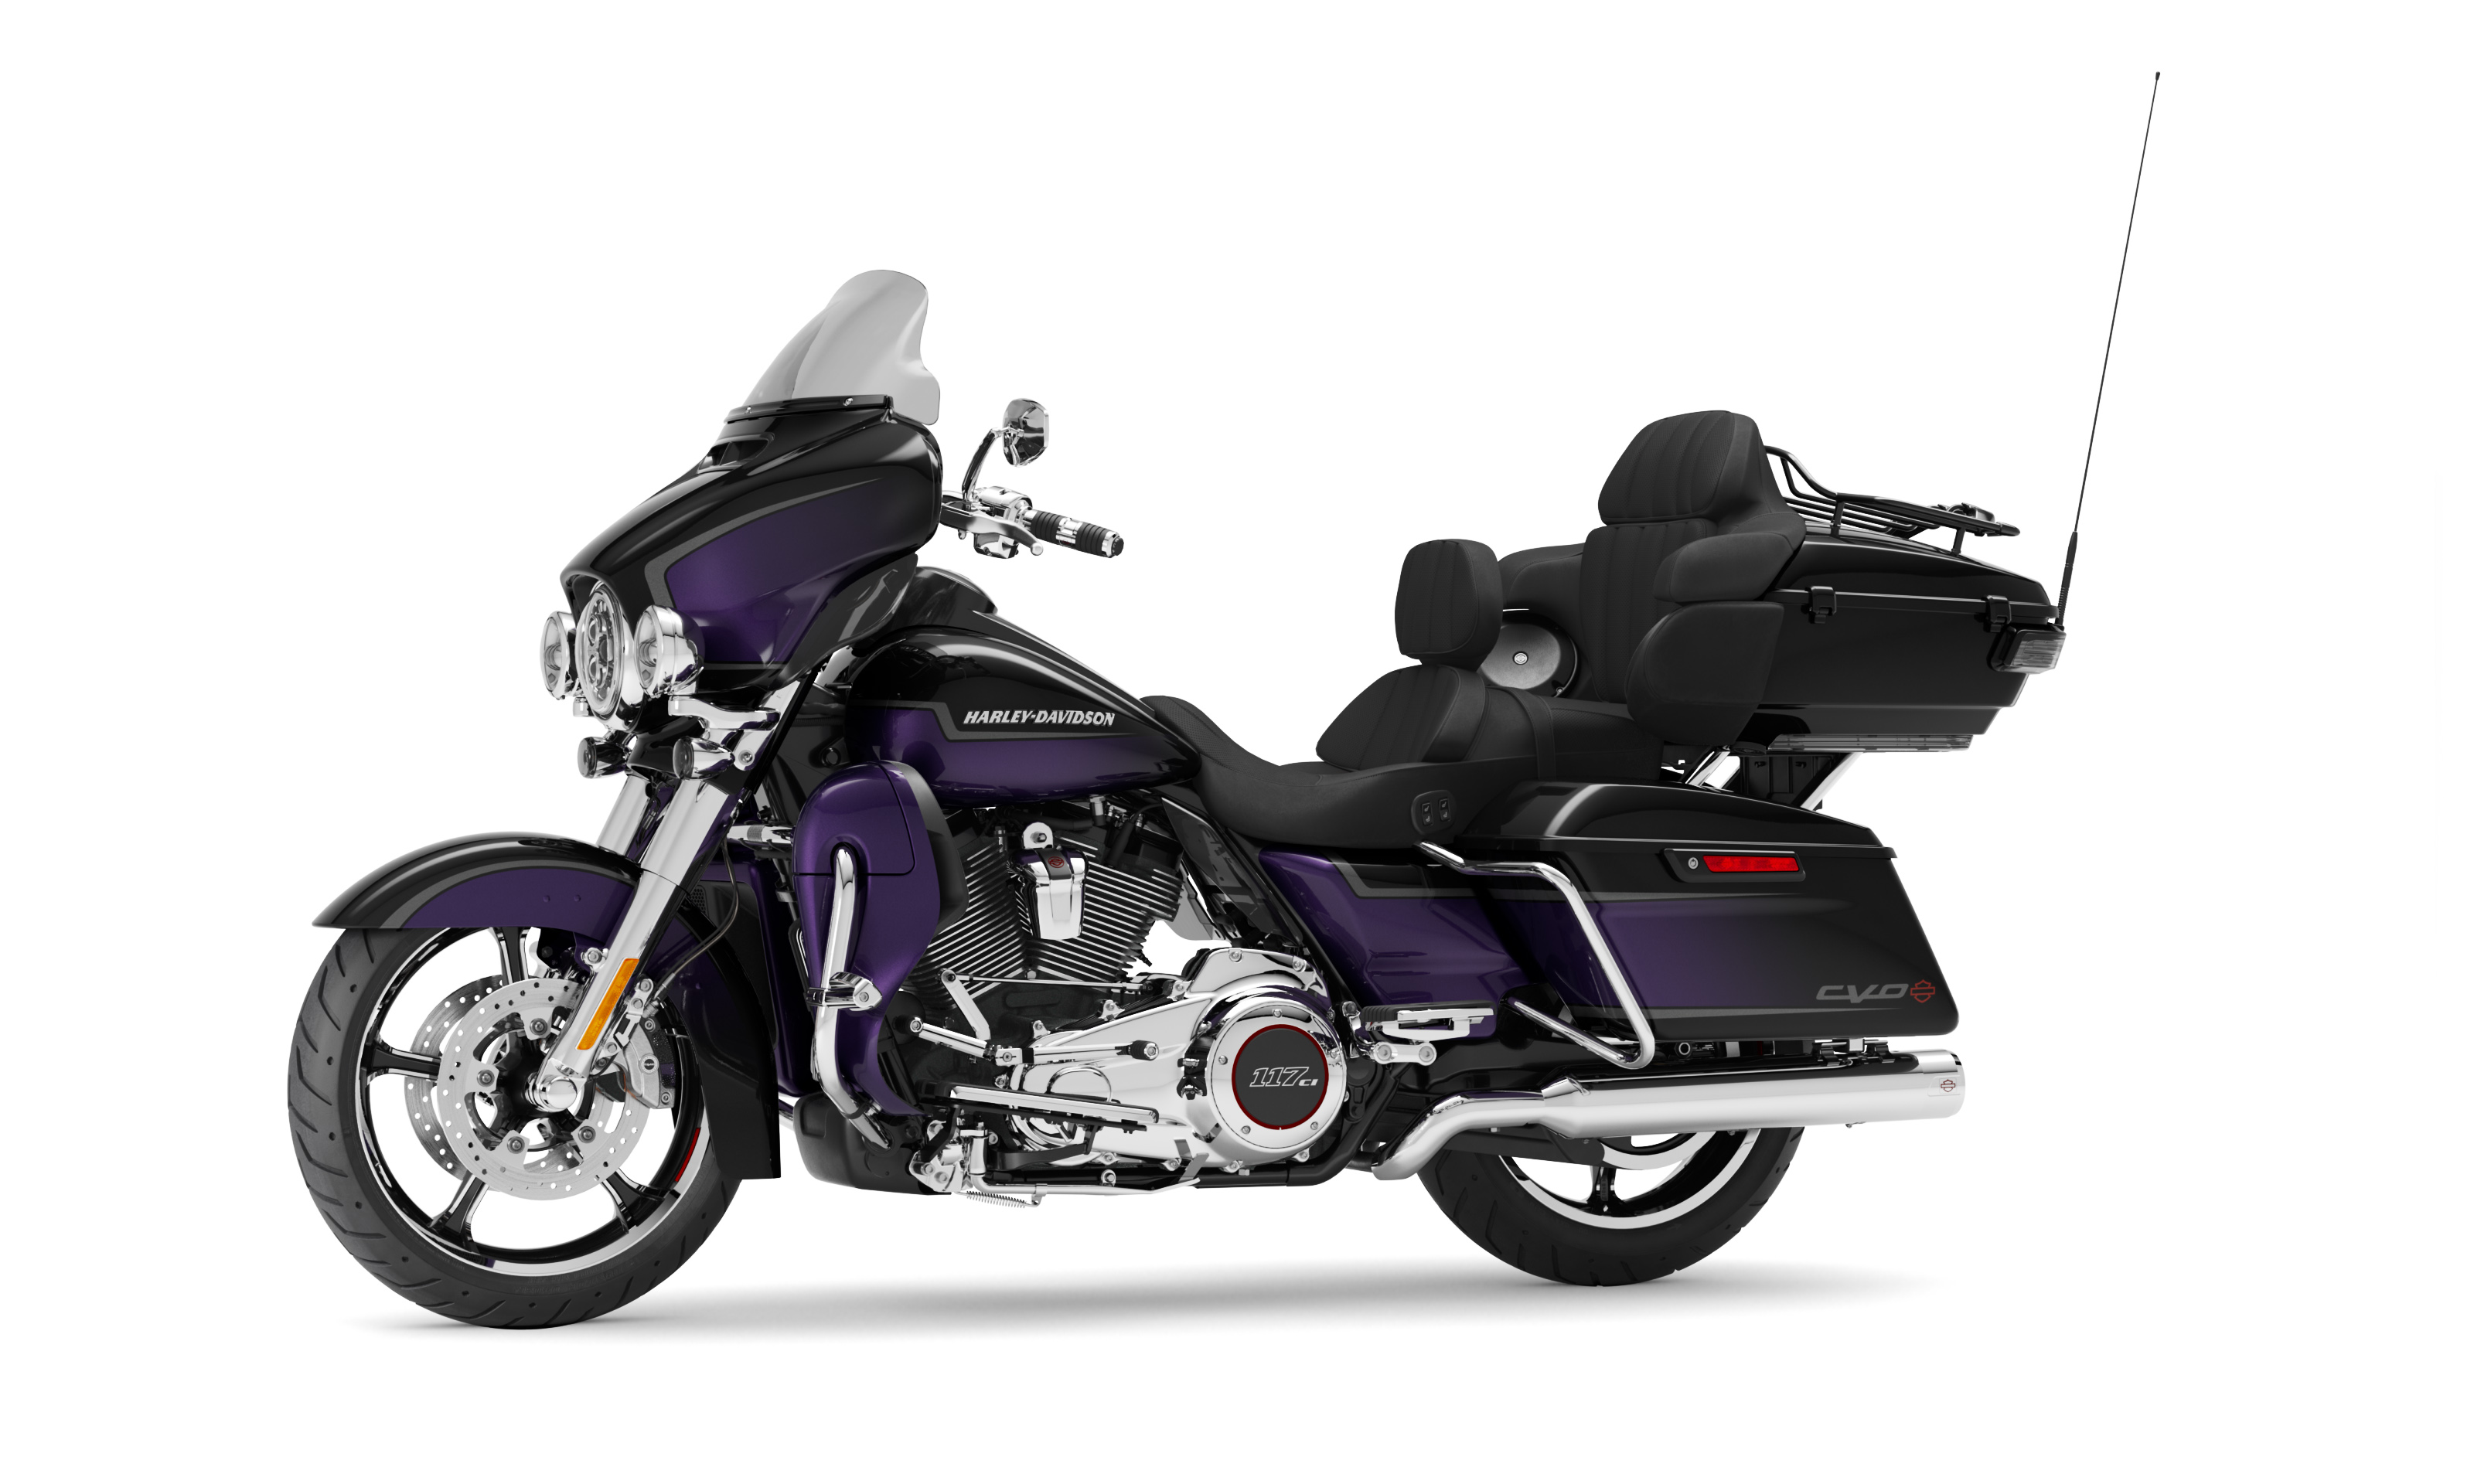 Harley Davidson Limited Edition Cvo 2020 Price Promotion Off55